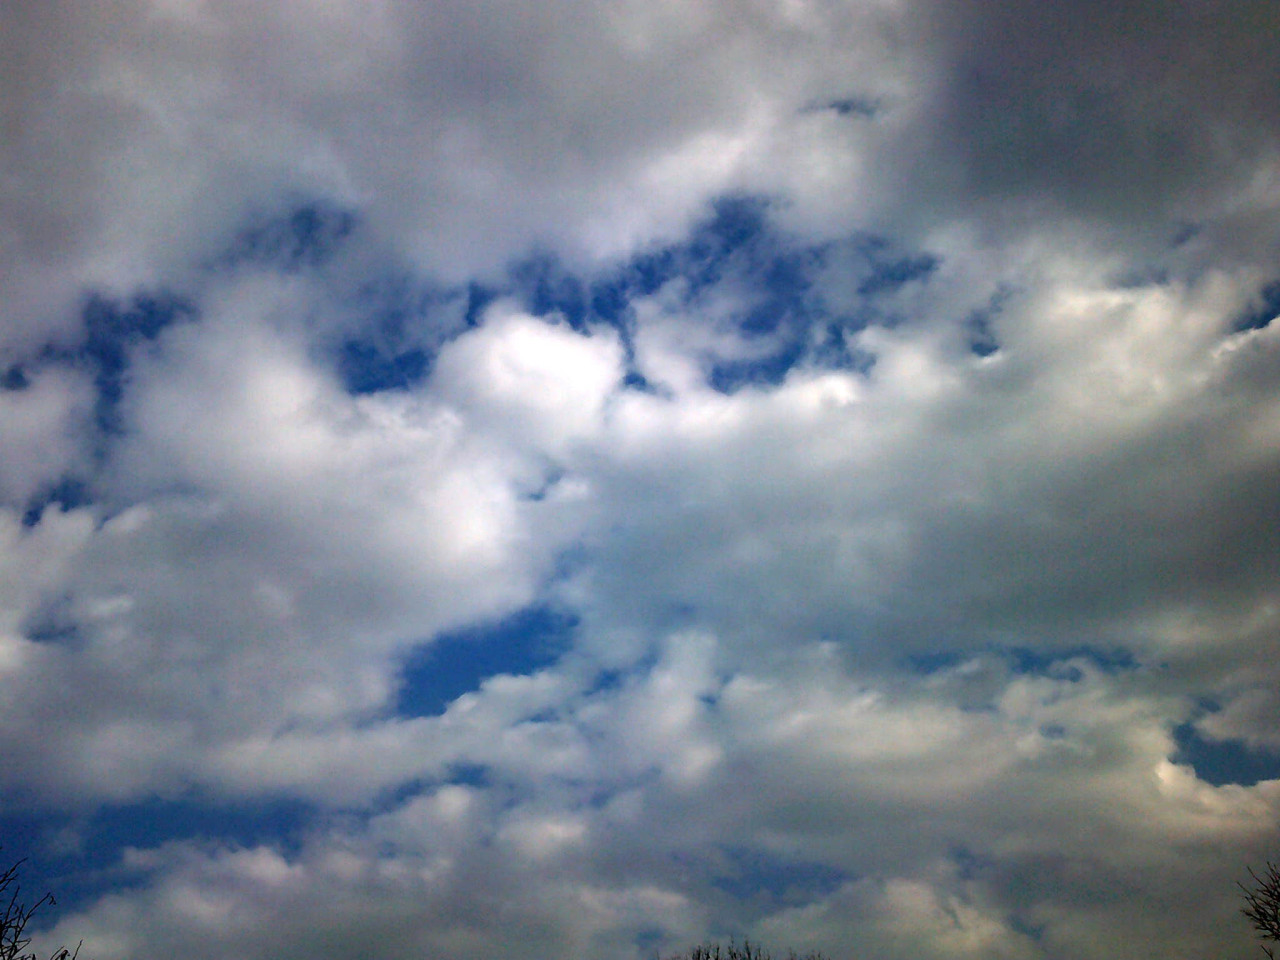 Meteo Ragusa: oggi martedì 19 Dicembre nuvoloso per velature.